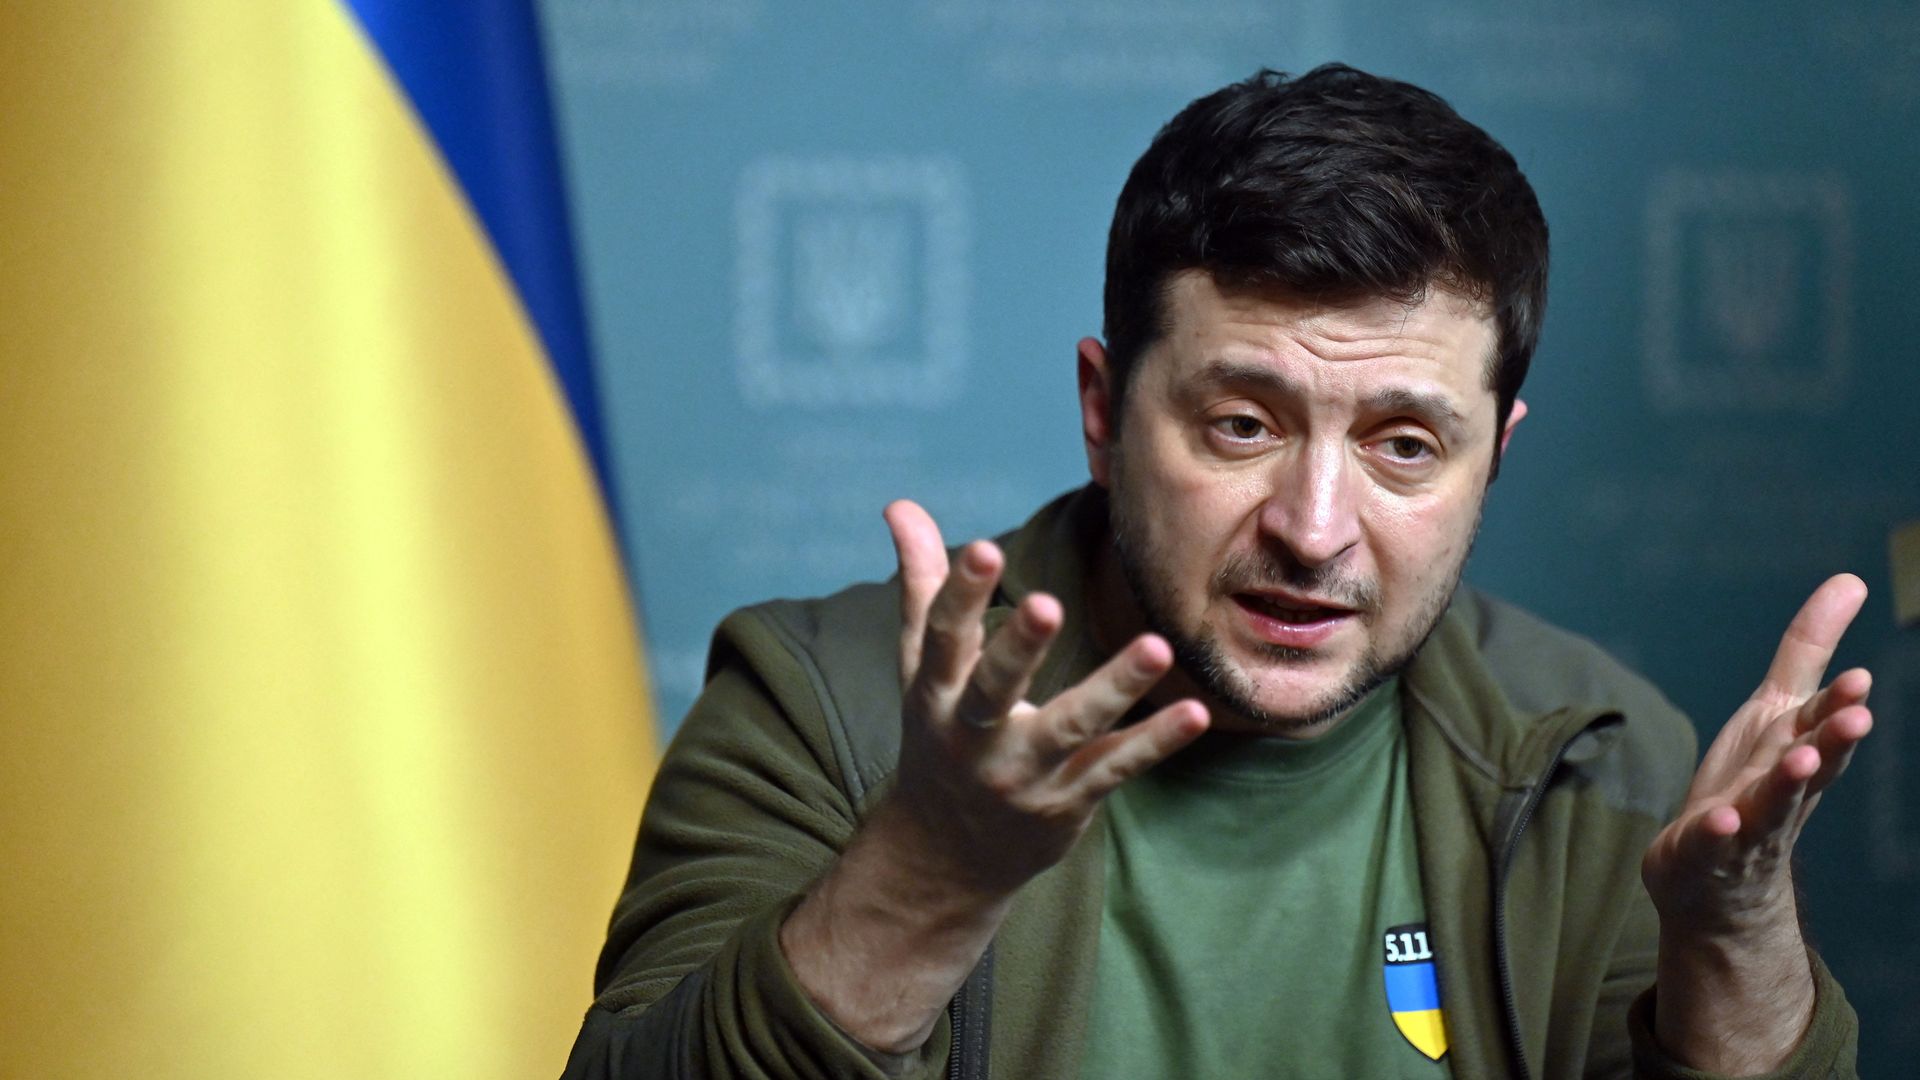  Ukrainian President Volodymyr Zelensky speaks during a press conference in Kyiv on March 3